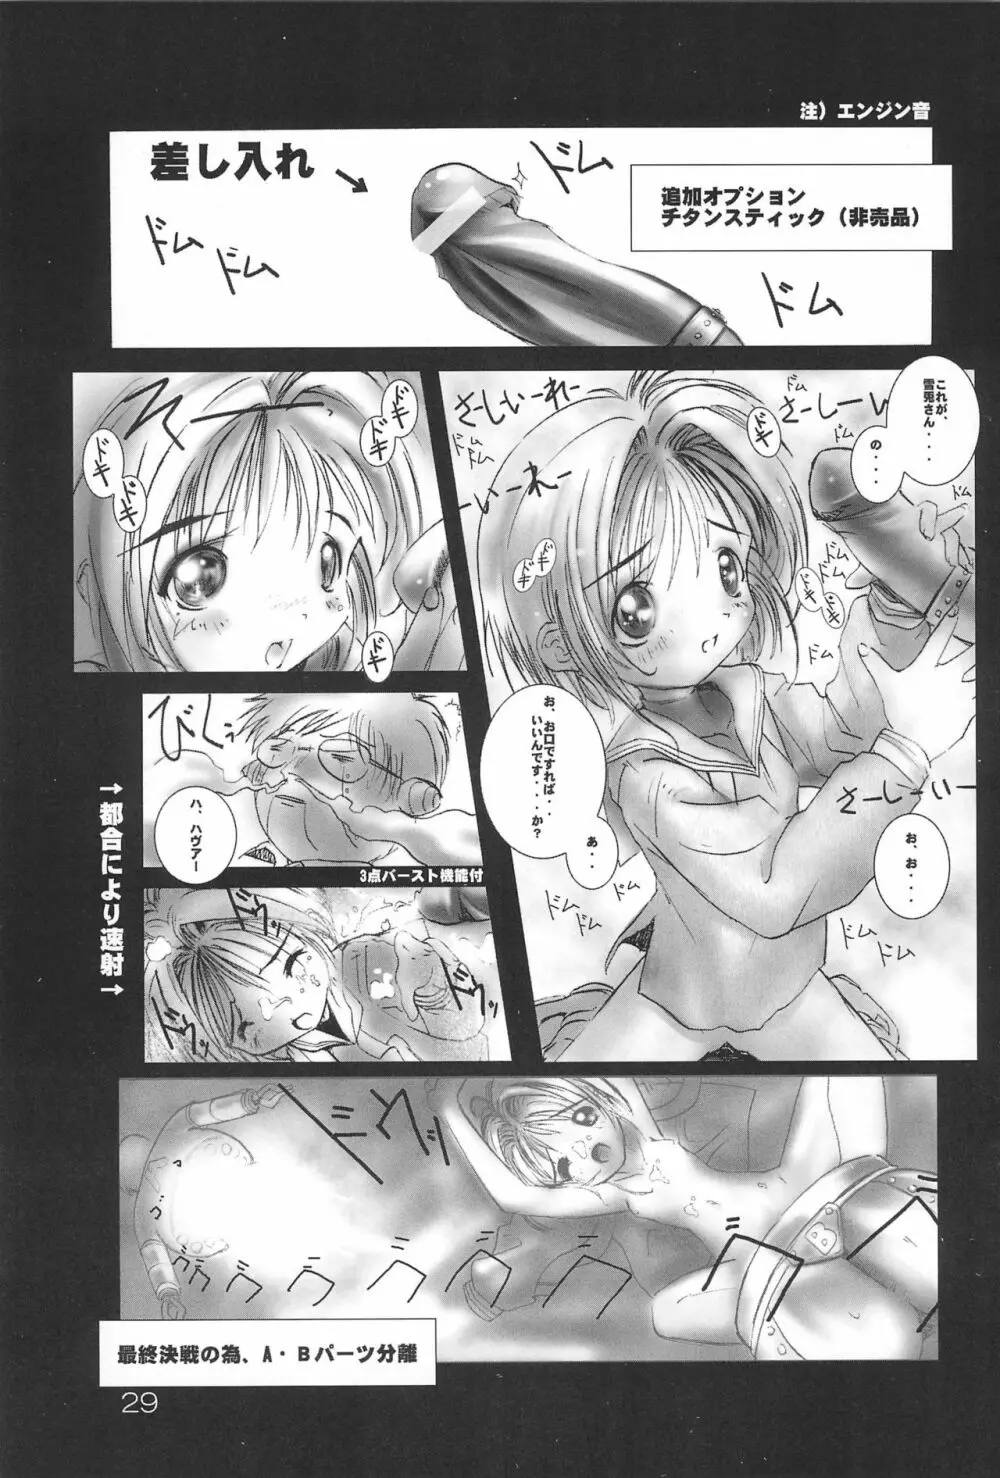 sakura 4th The last card - page29